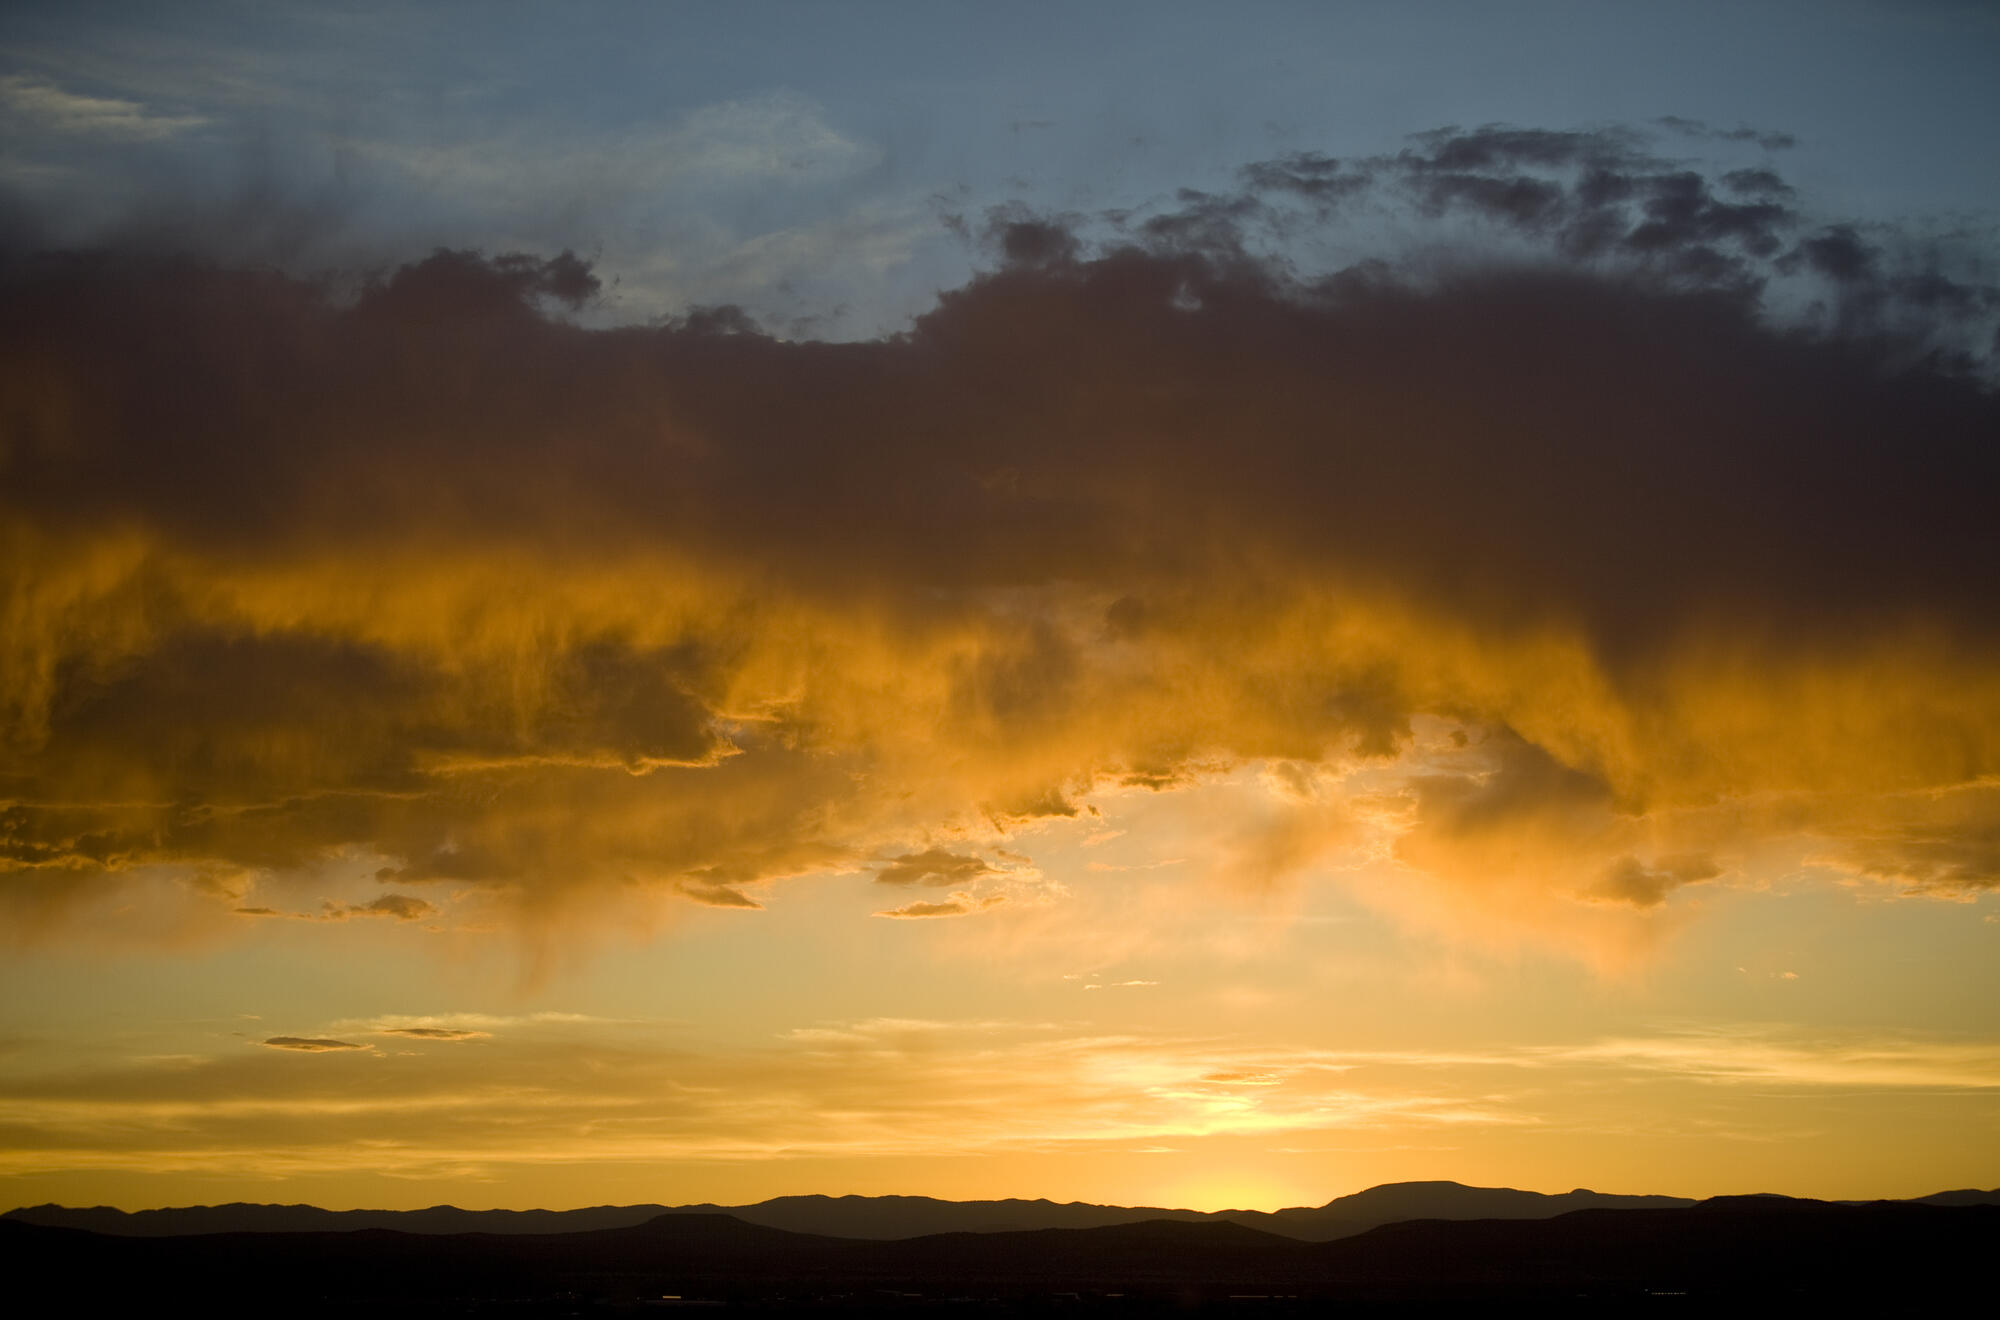 Sunset in Santa Fe, New Mexico